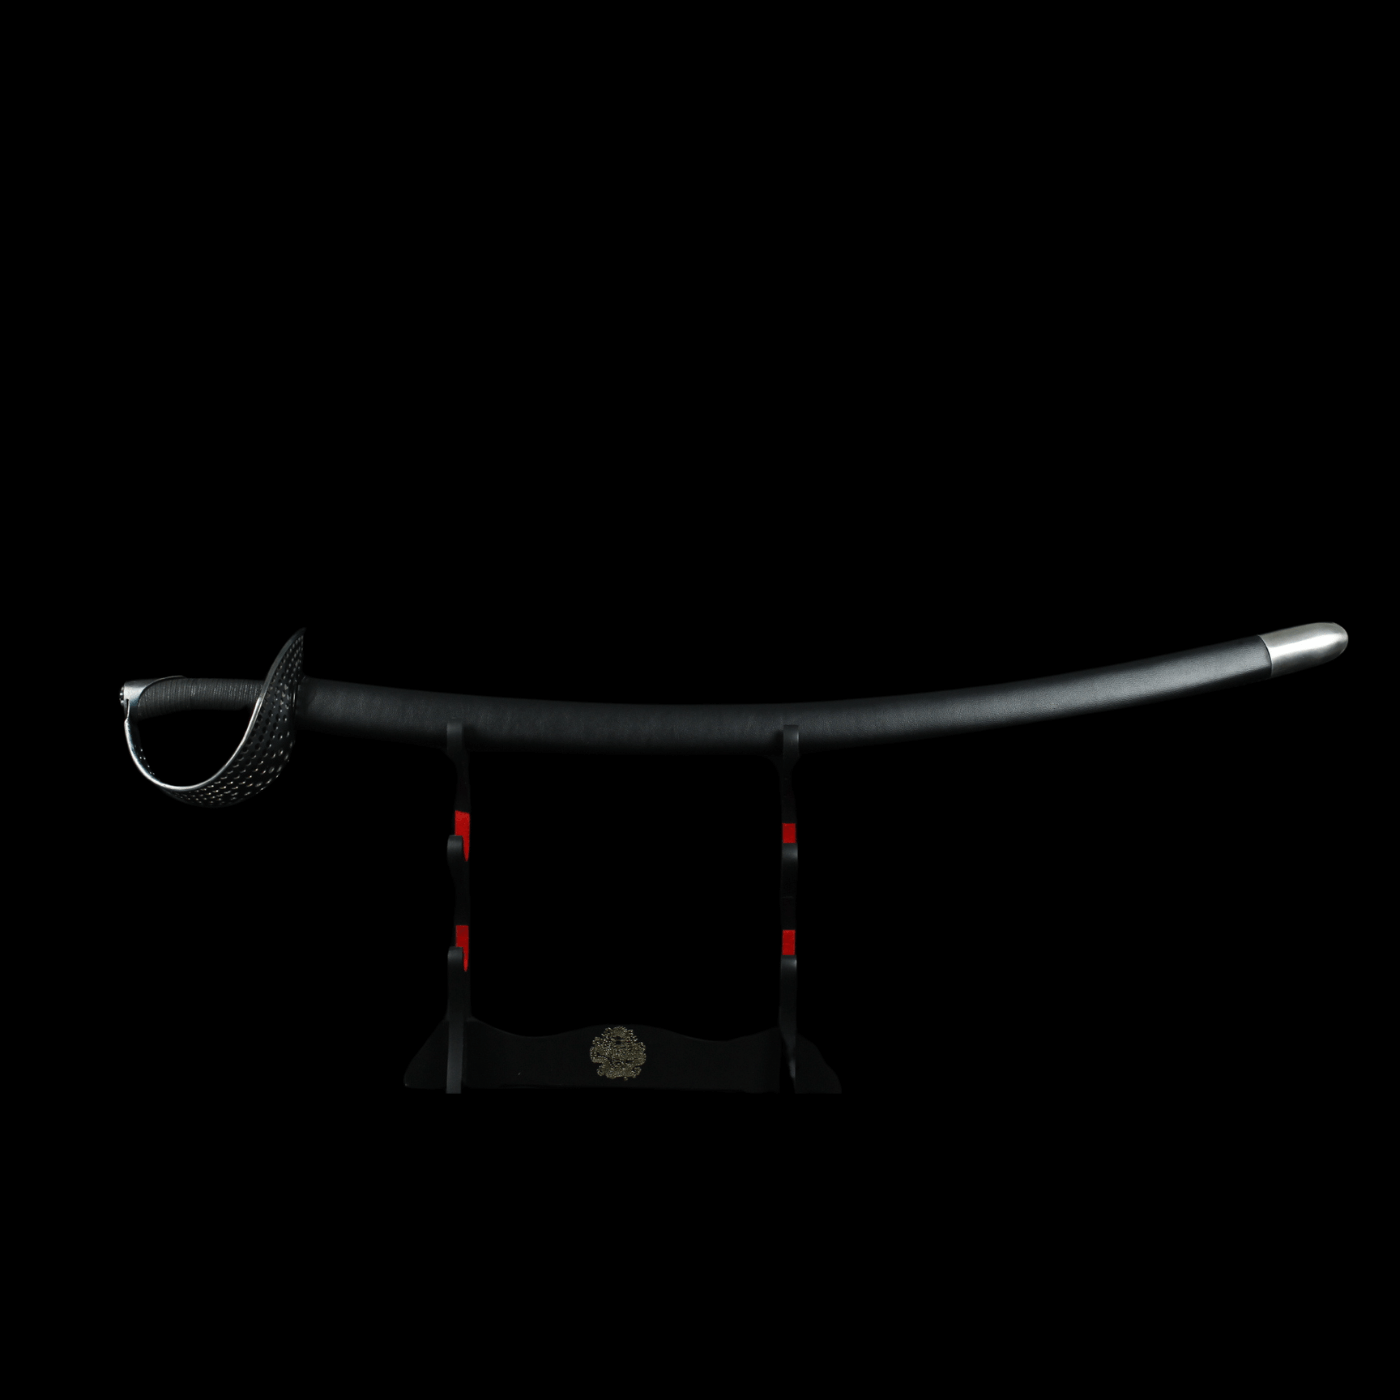 SWM-1026 Swordier medieval saber sword replica with Shashka style spring steel blade design